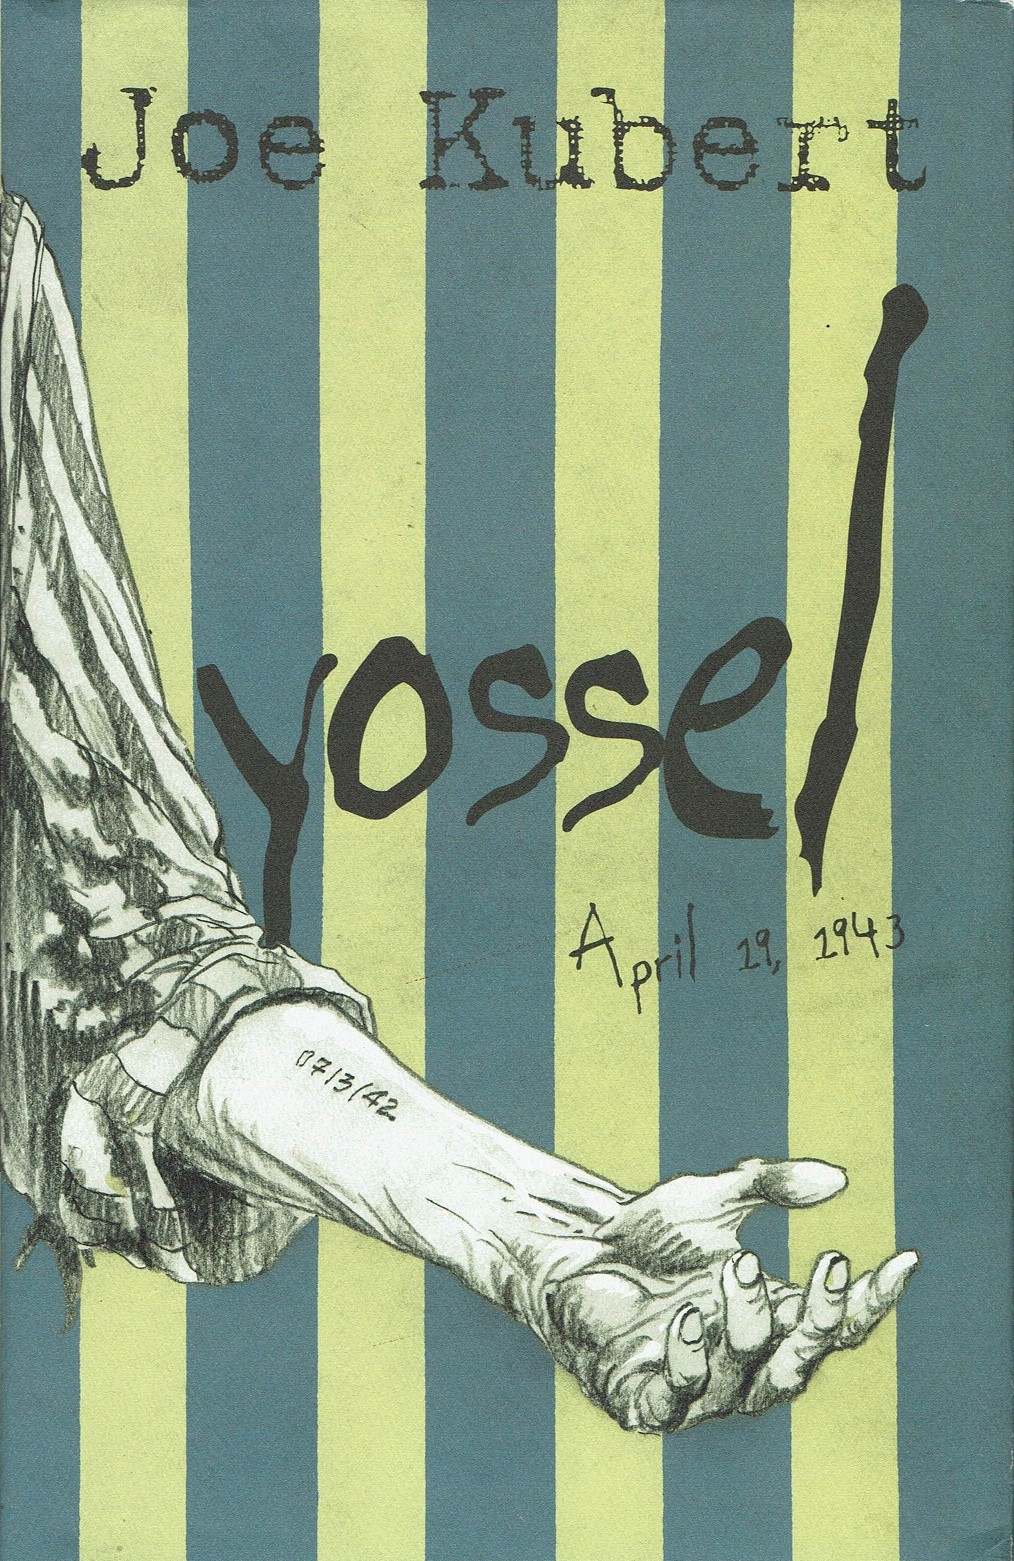 Read online Yossel: April 19, 1943 comic -  Issue # TPB - 1